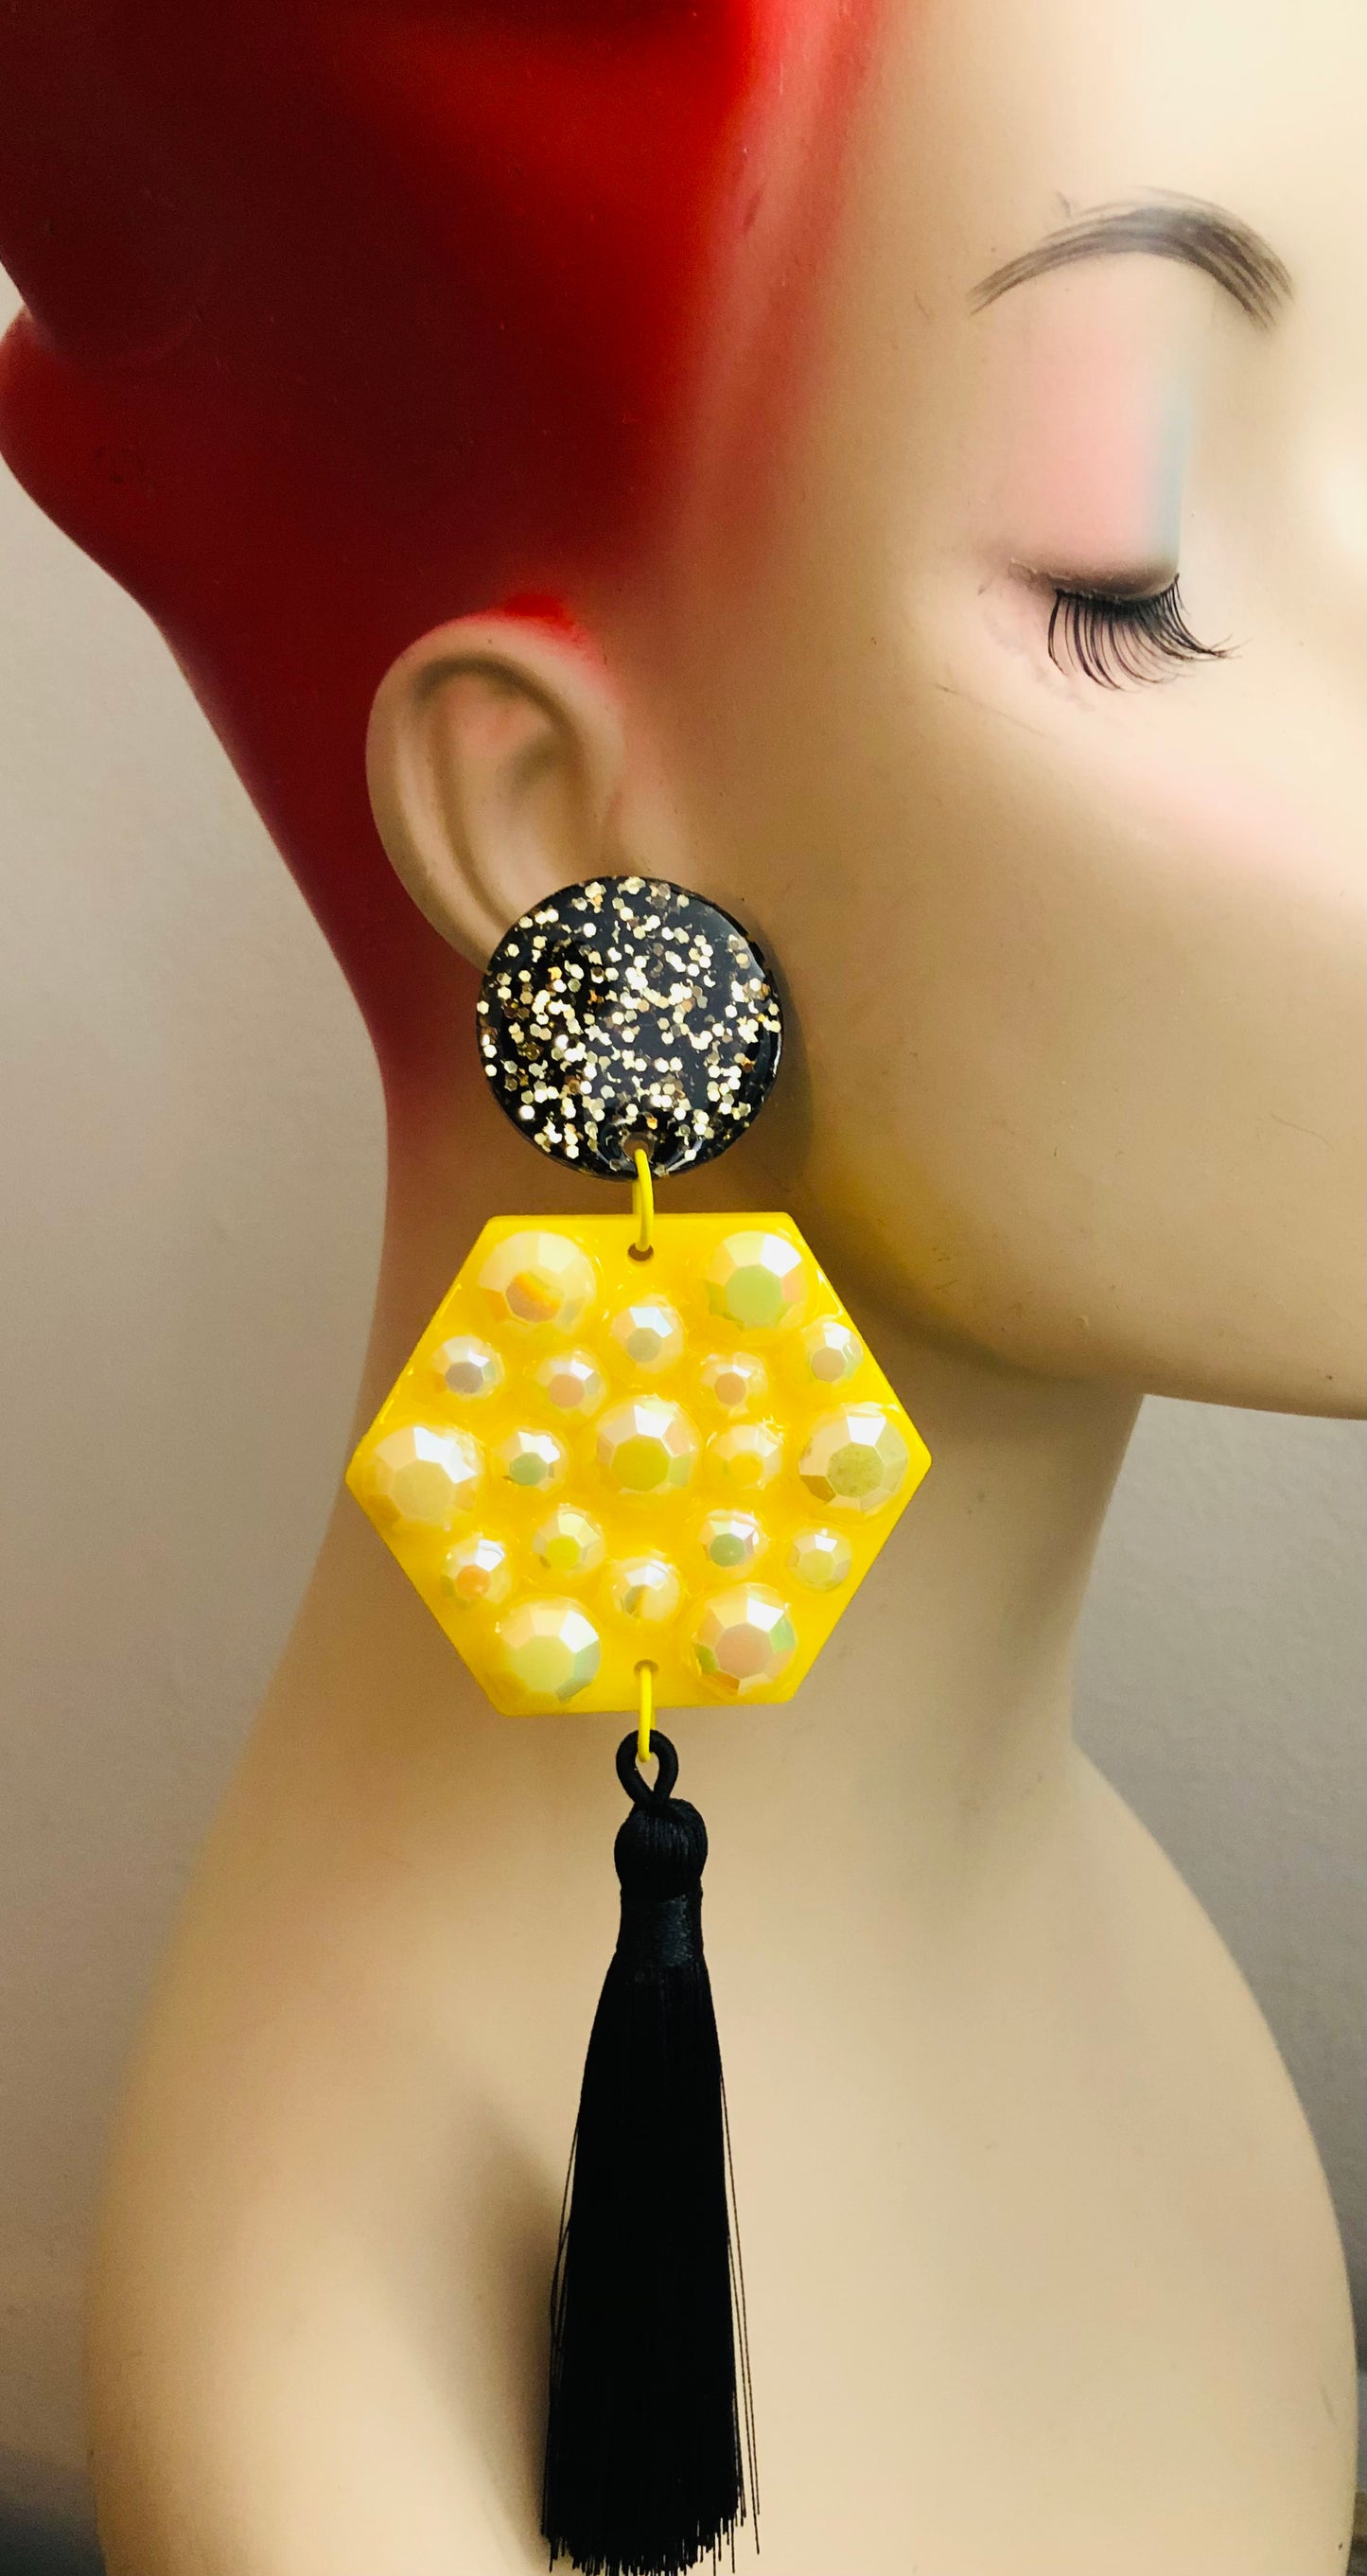 “The Gemz” Tassel Stud Earrings